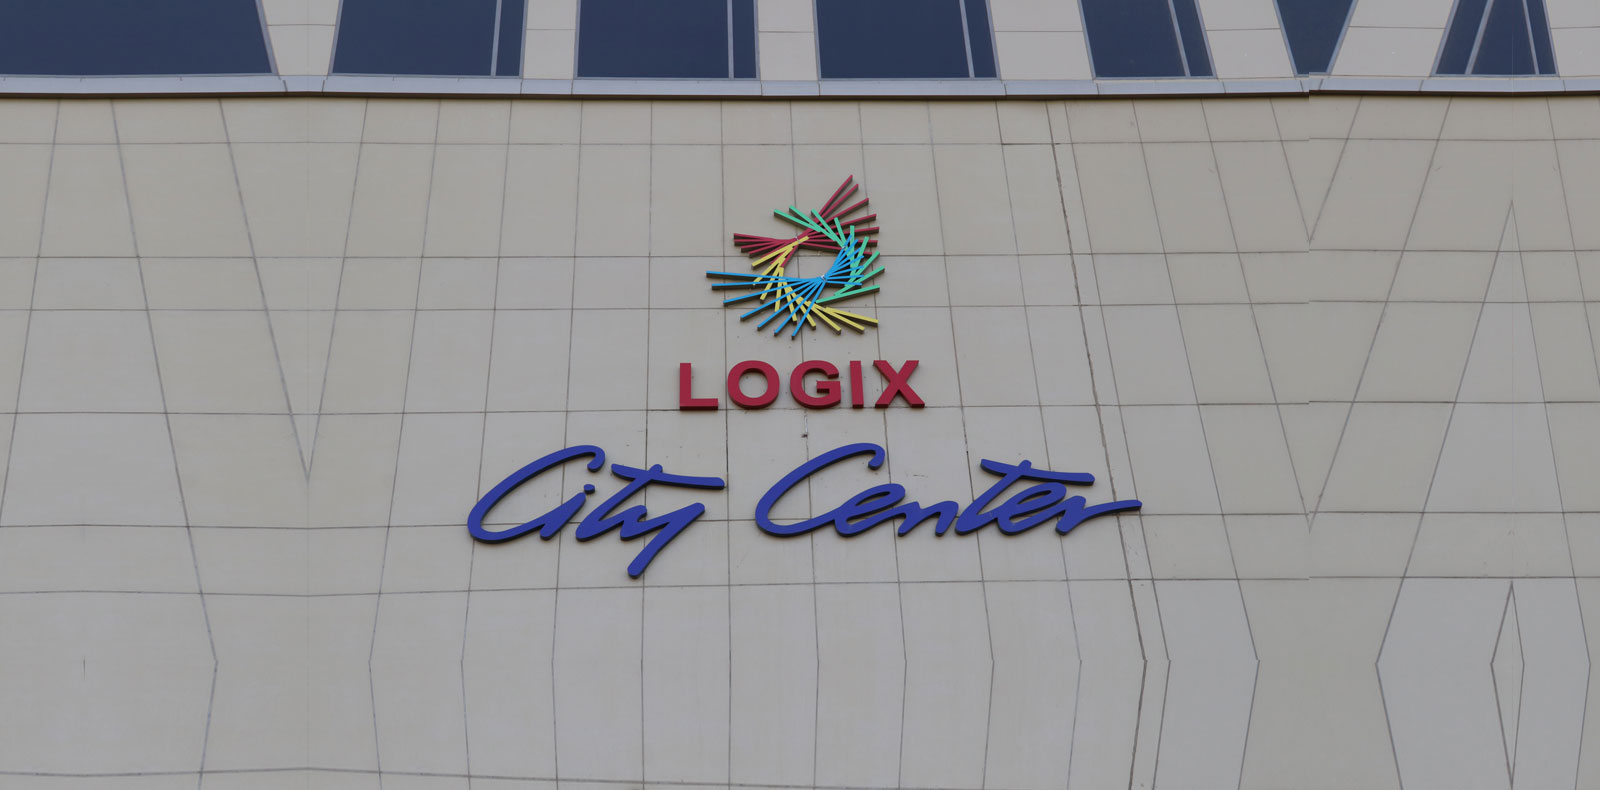 Logix city center